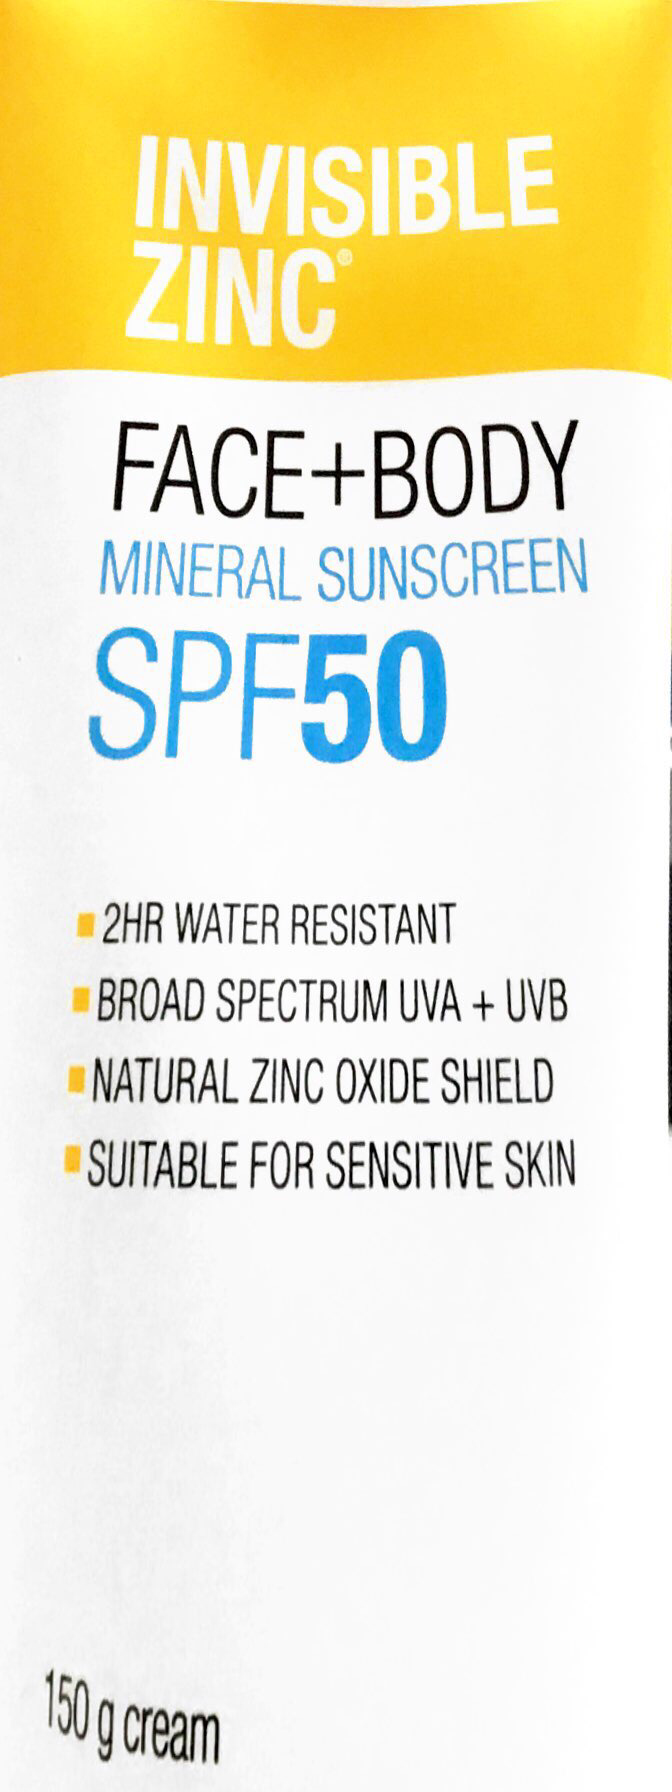 Invisible zinc Face + Body Mineral Sunscreen SPF 50 2 Hr Water resistant Cream 150g - Pakuranga Pharmacy